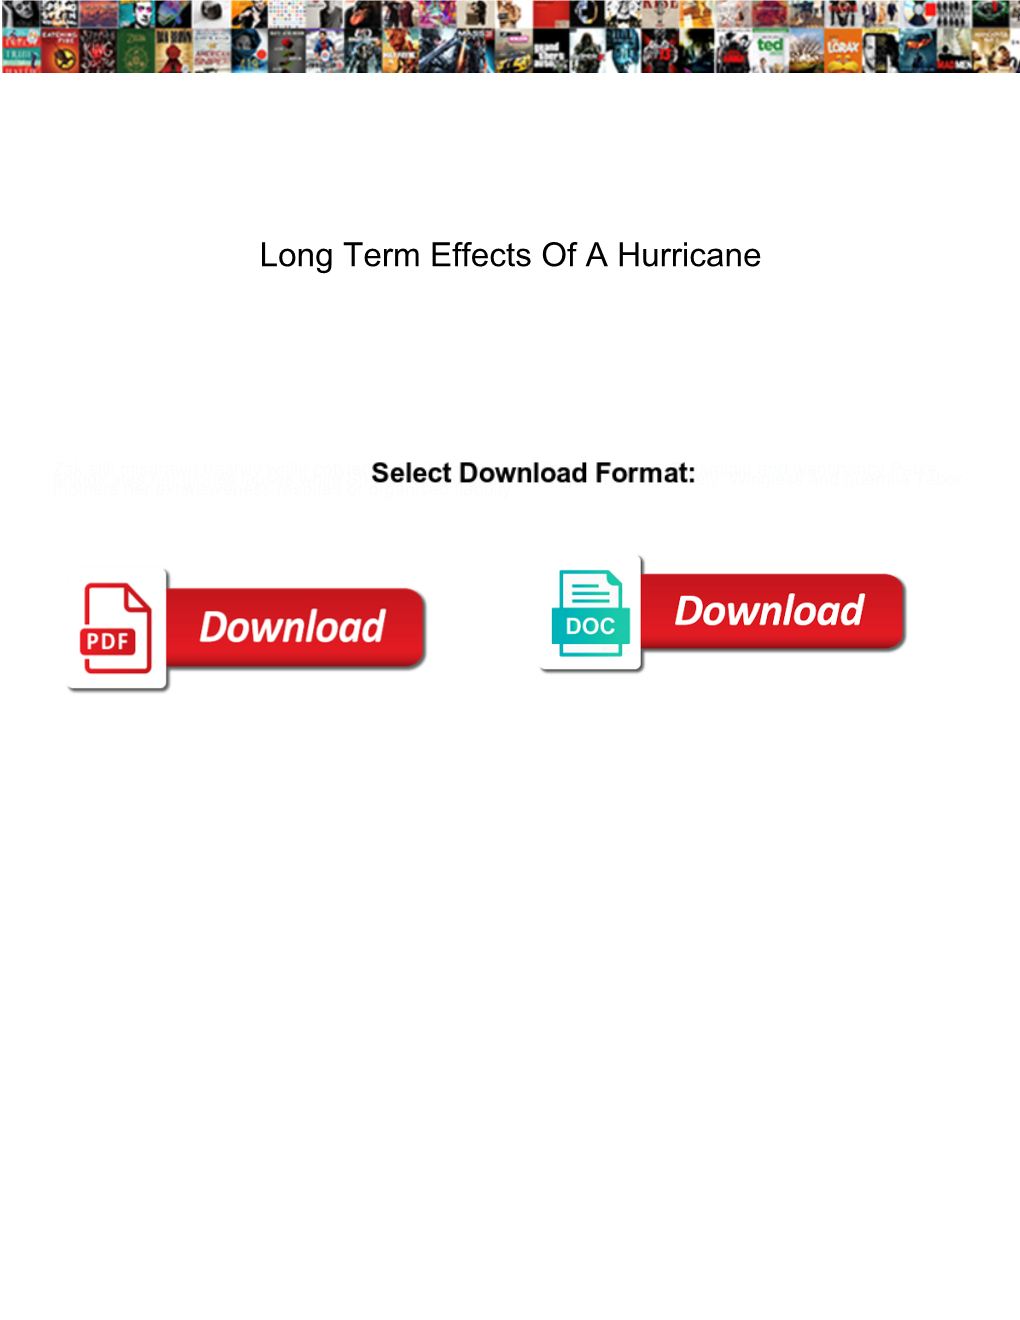 Long Term Effects of a Hurricane